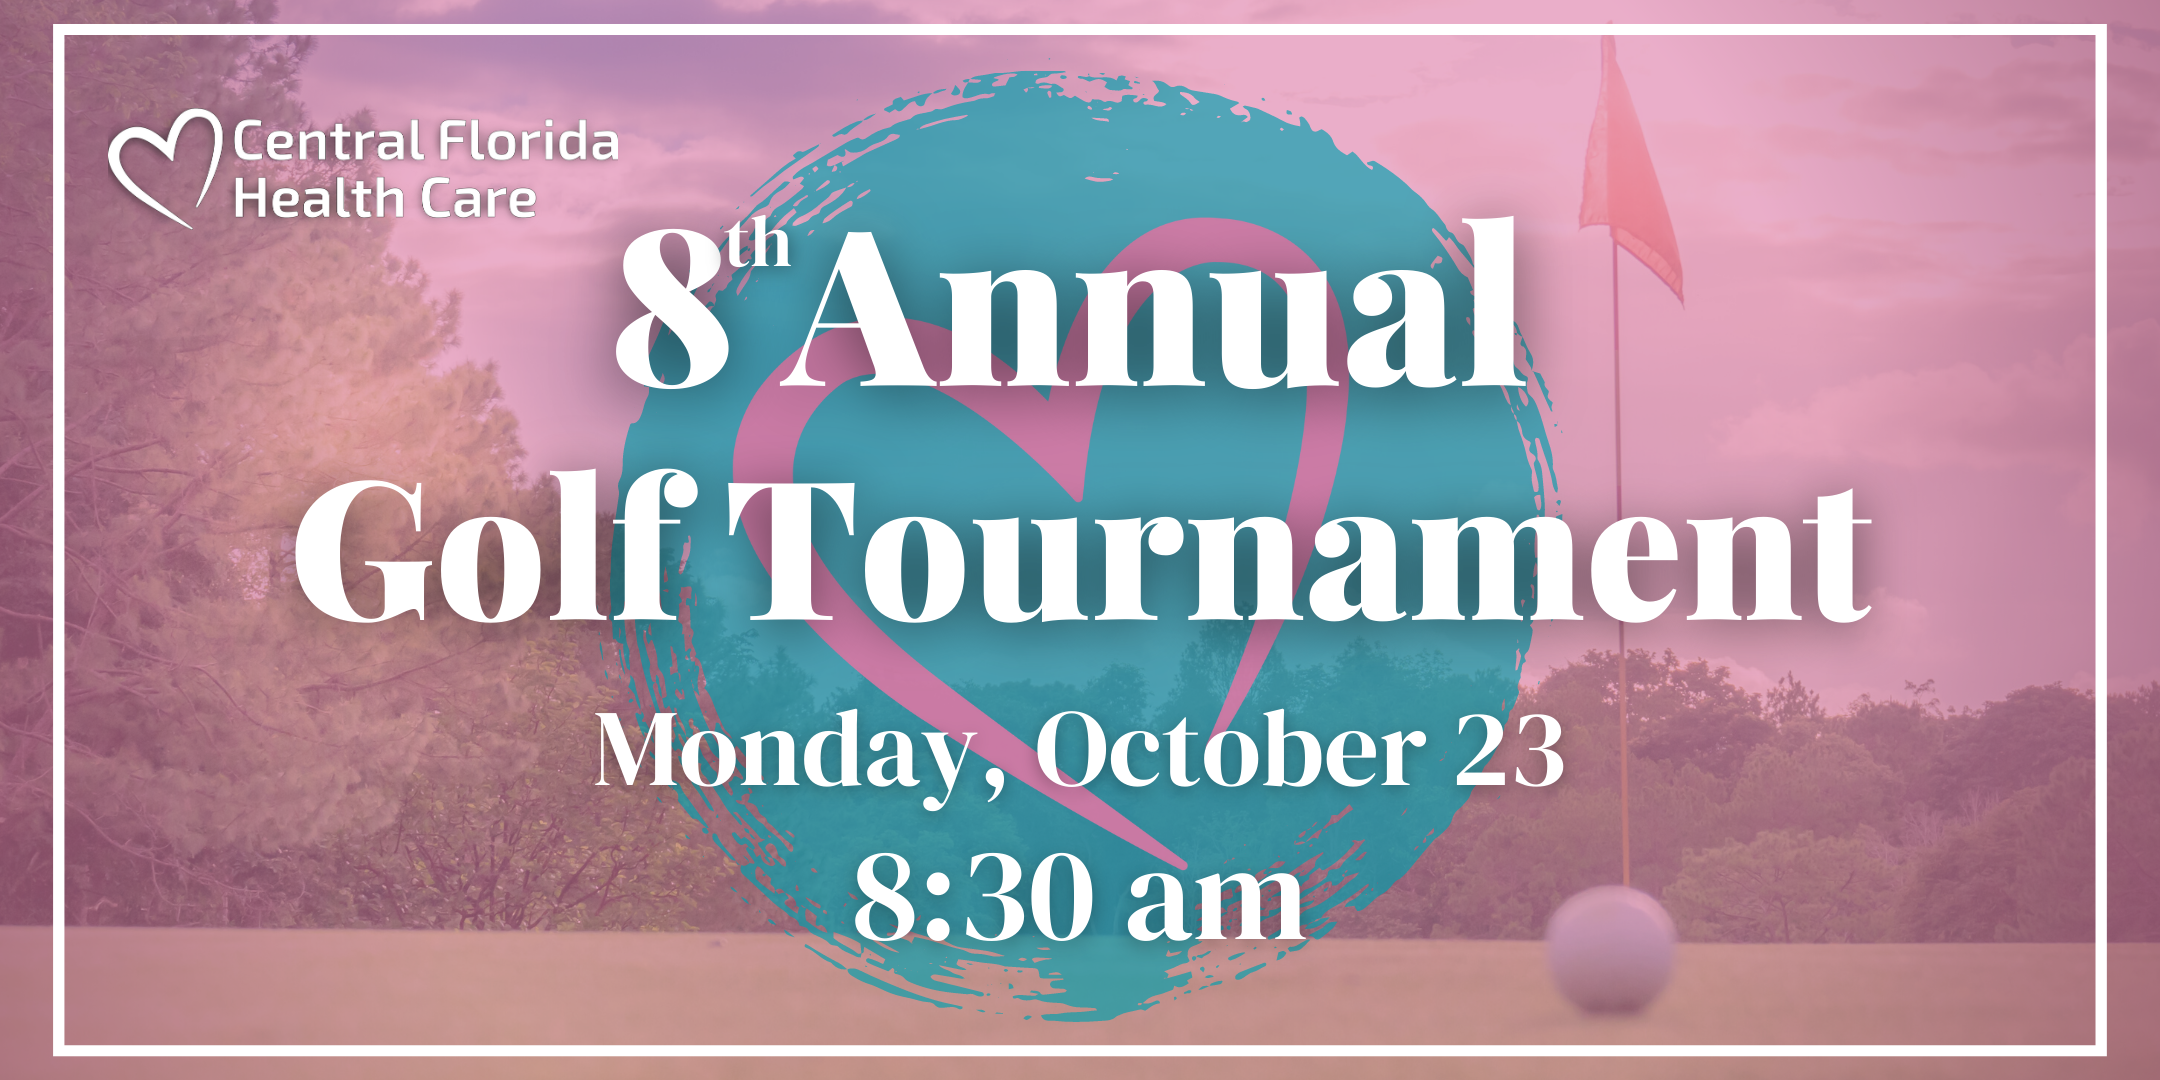 8th Annual Central Florida Health Care Golf Tournament